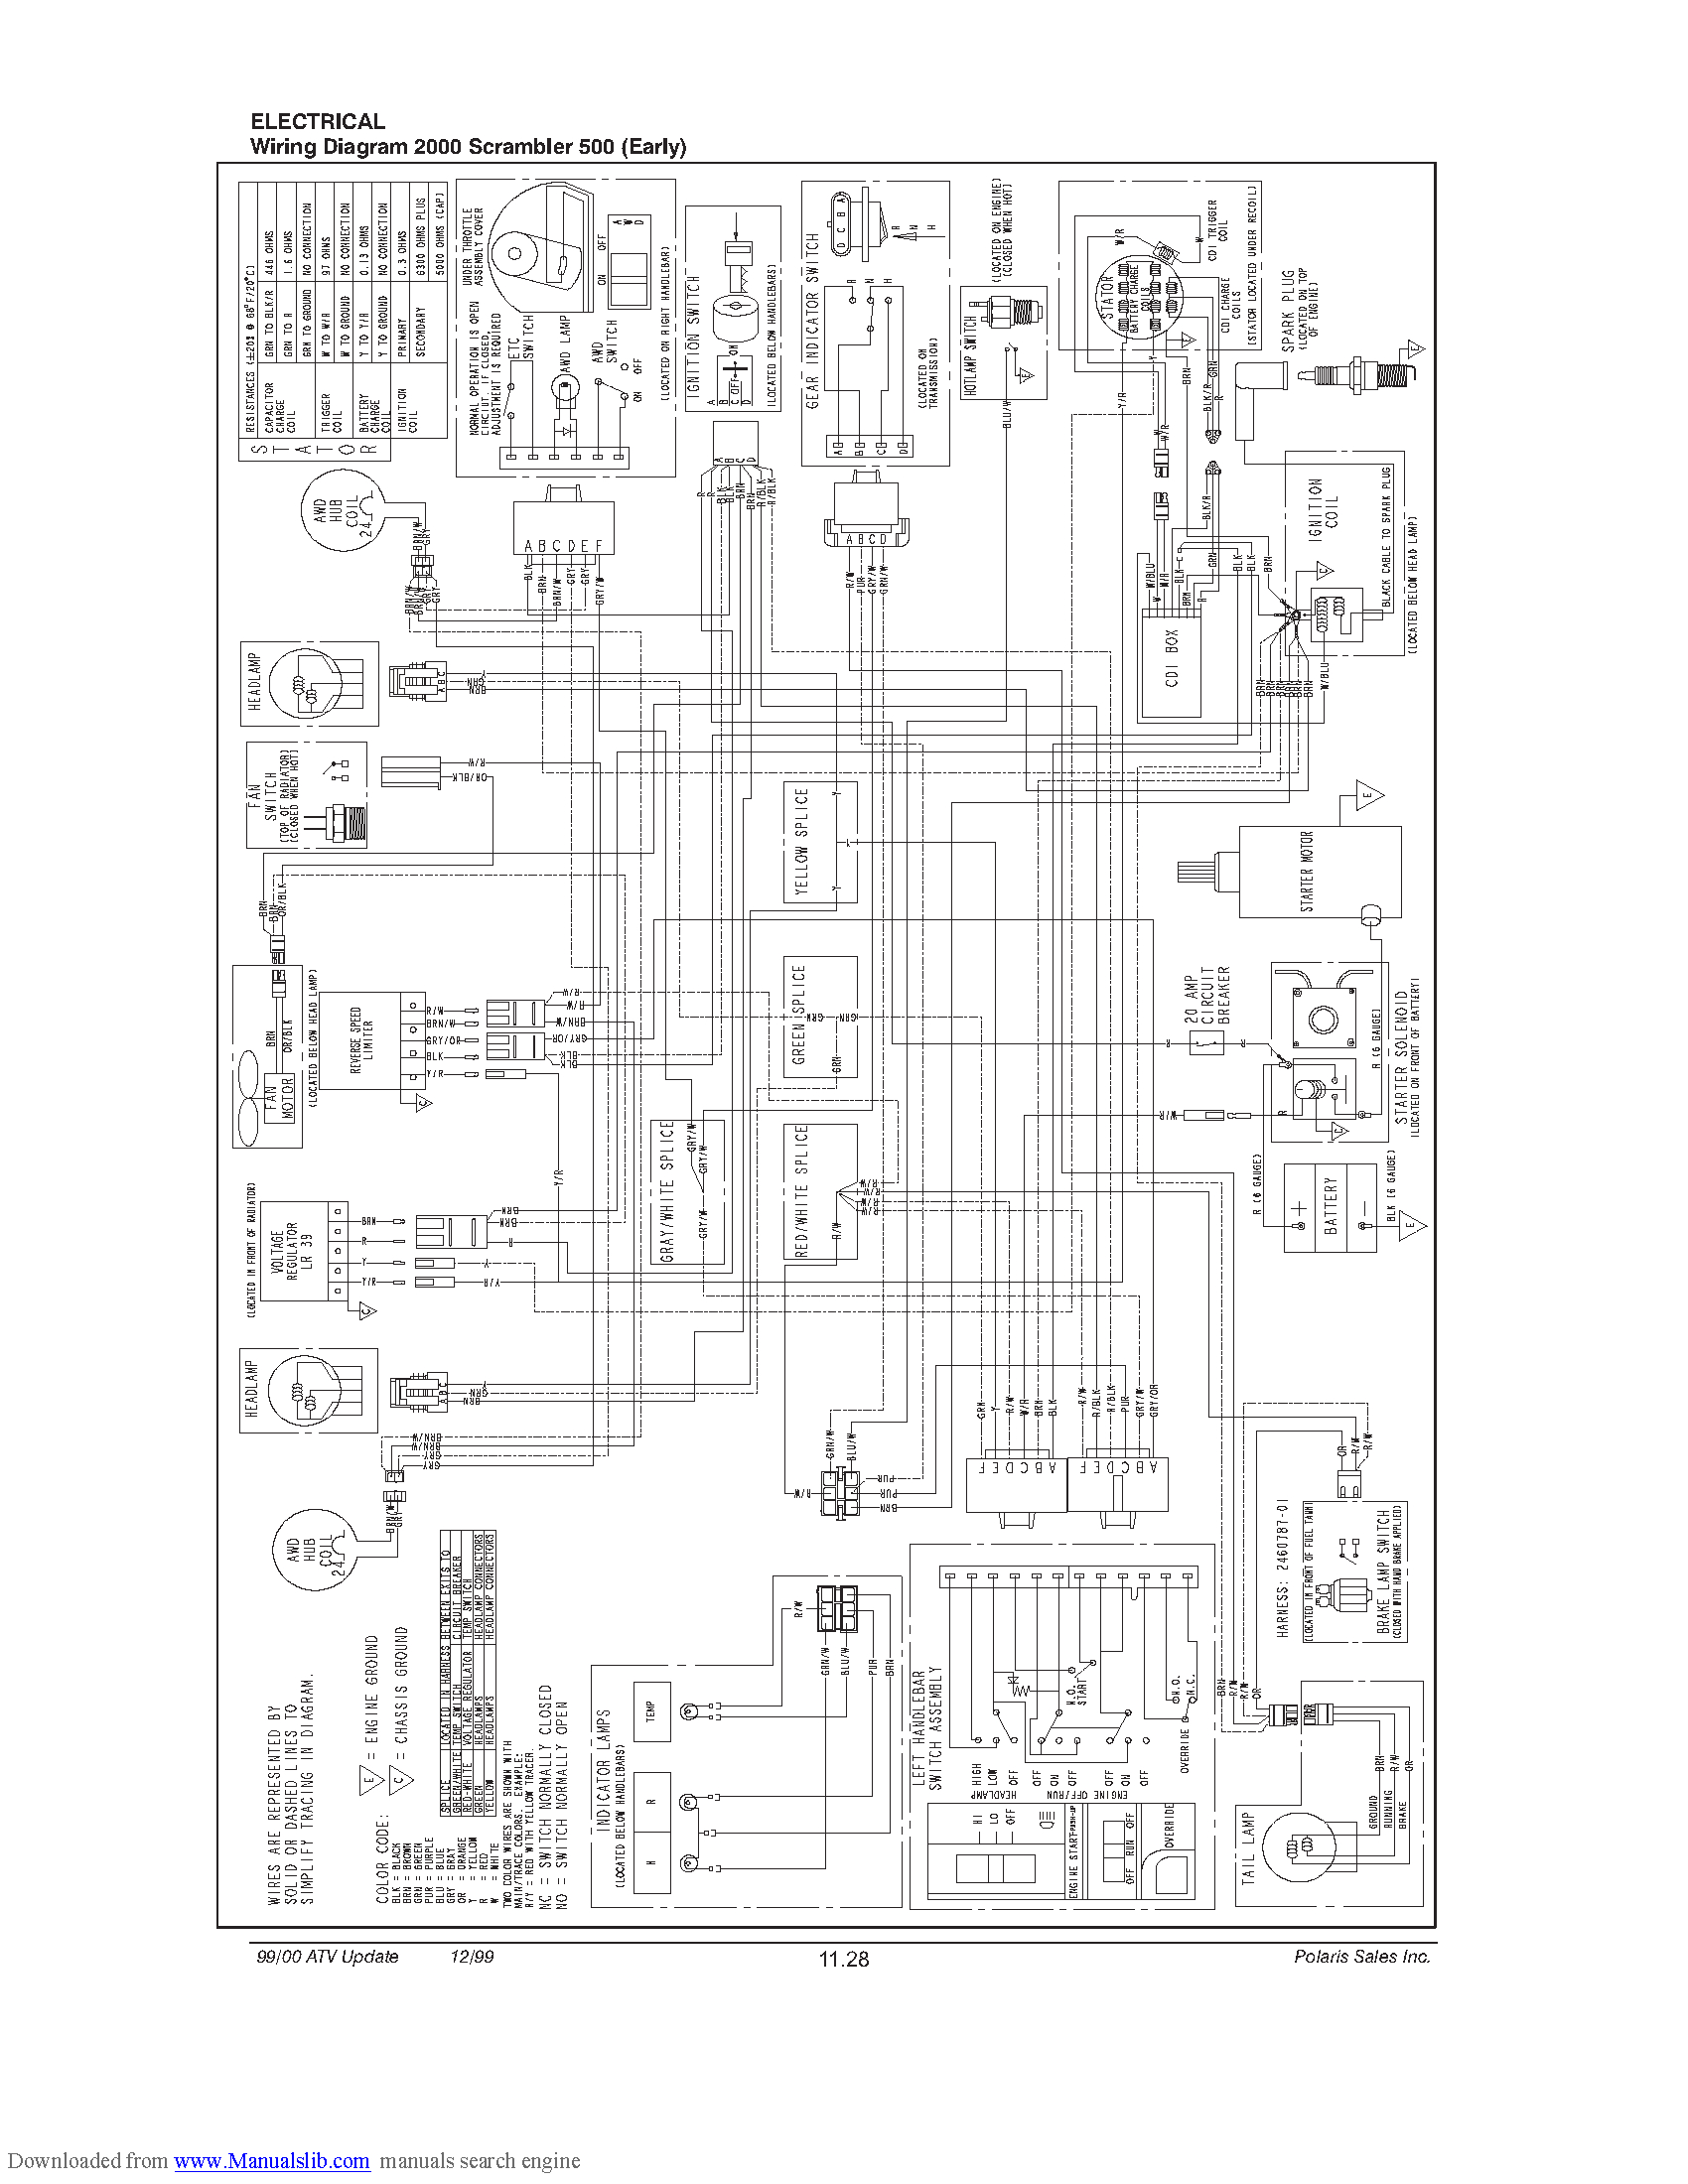 112411d1537367543 2004 scrambler 500 igention switch wiring diagram polaris scrambler 500 wiring early 2000 png